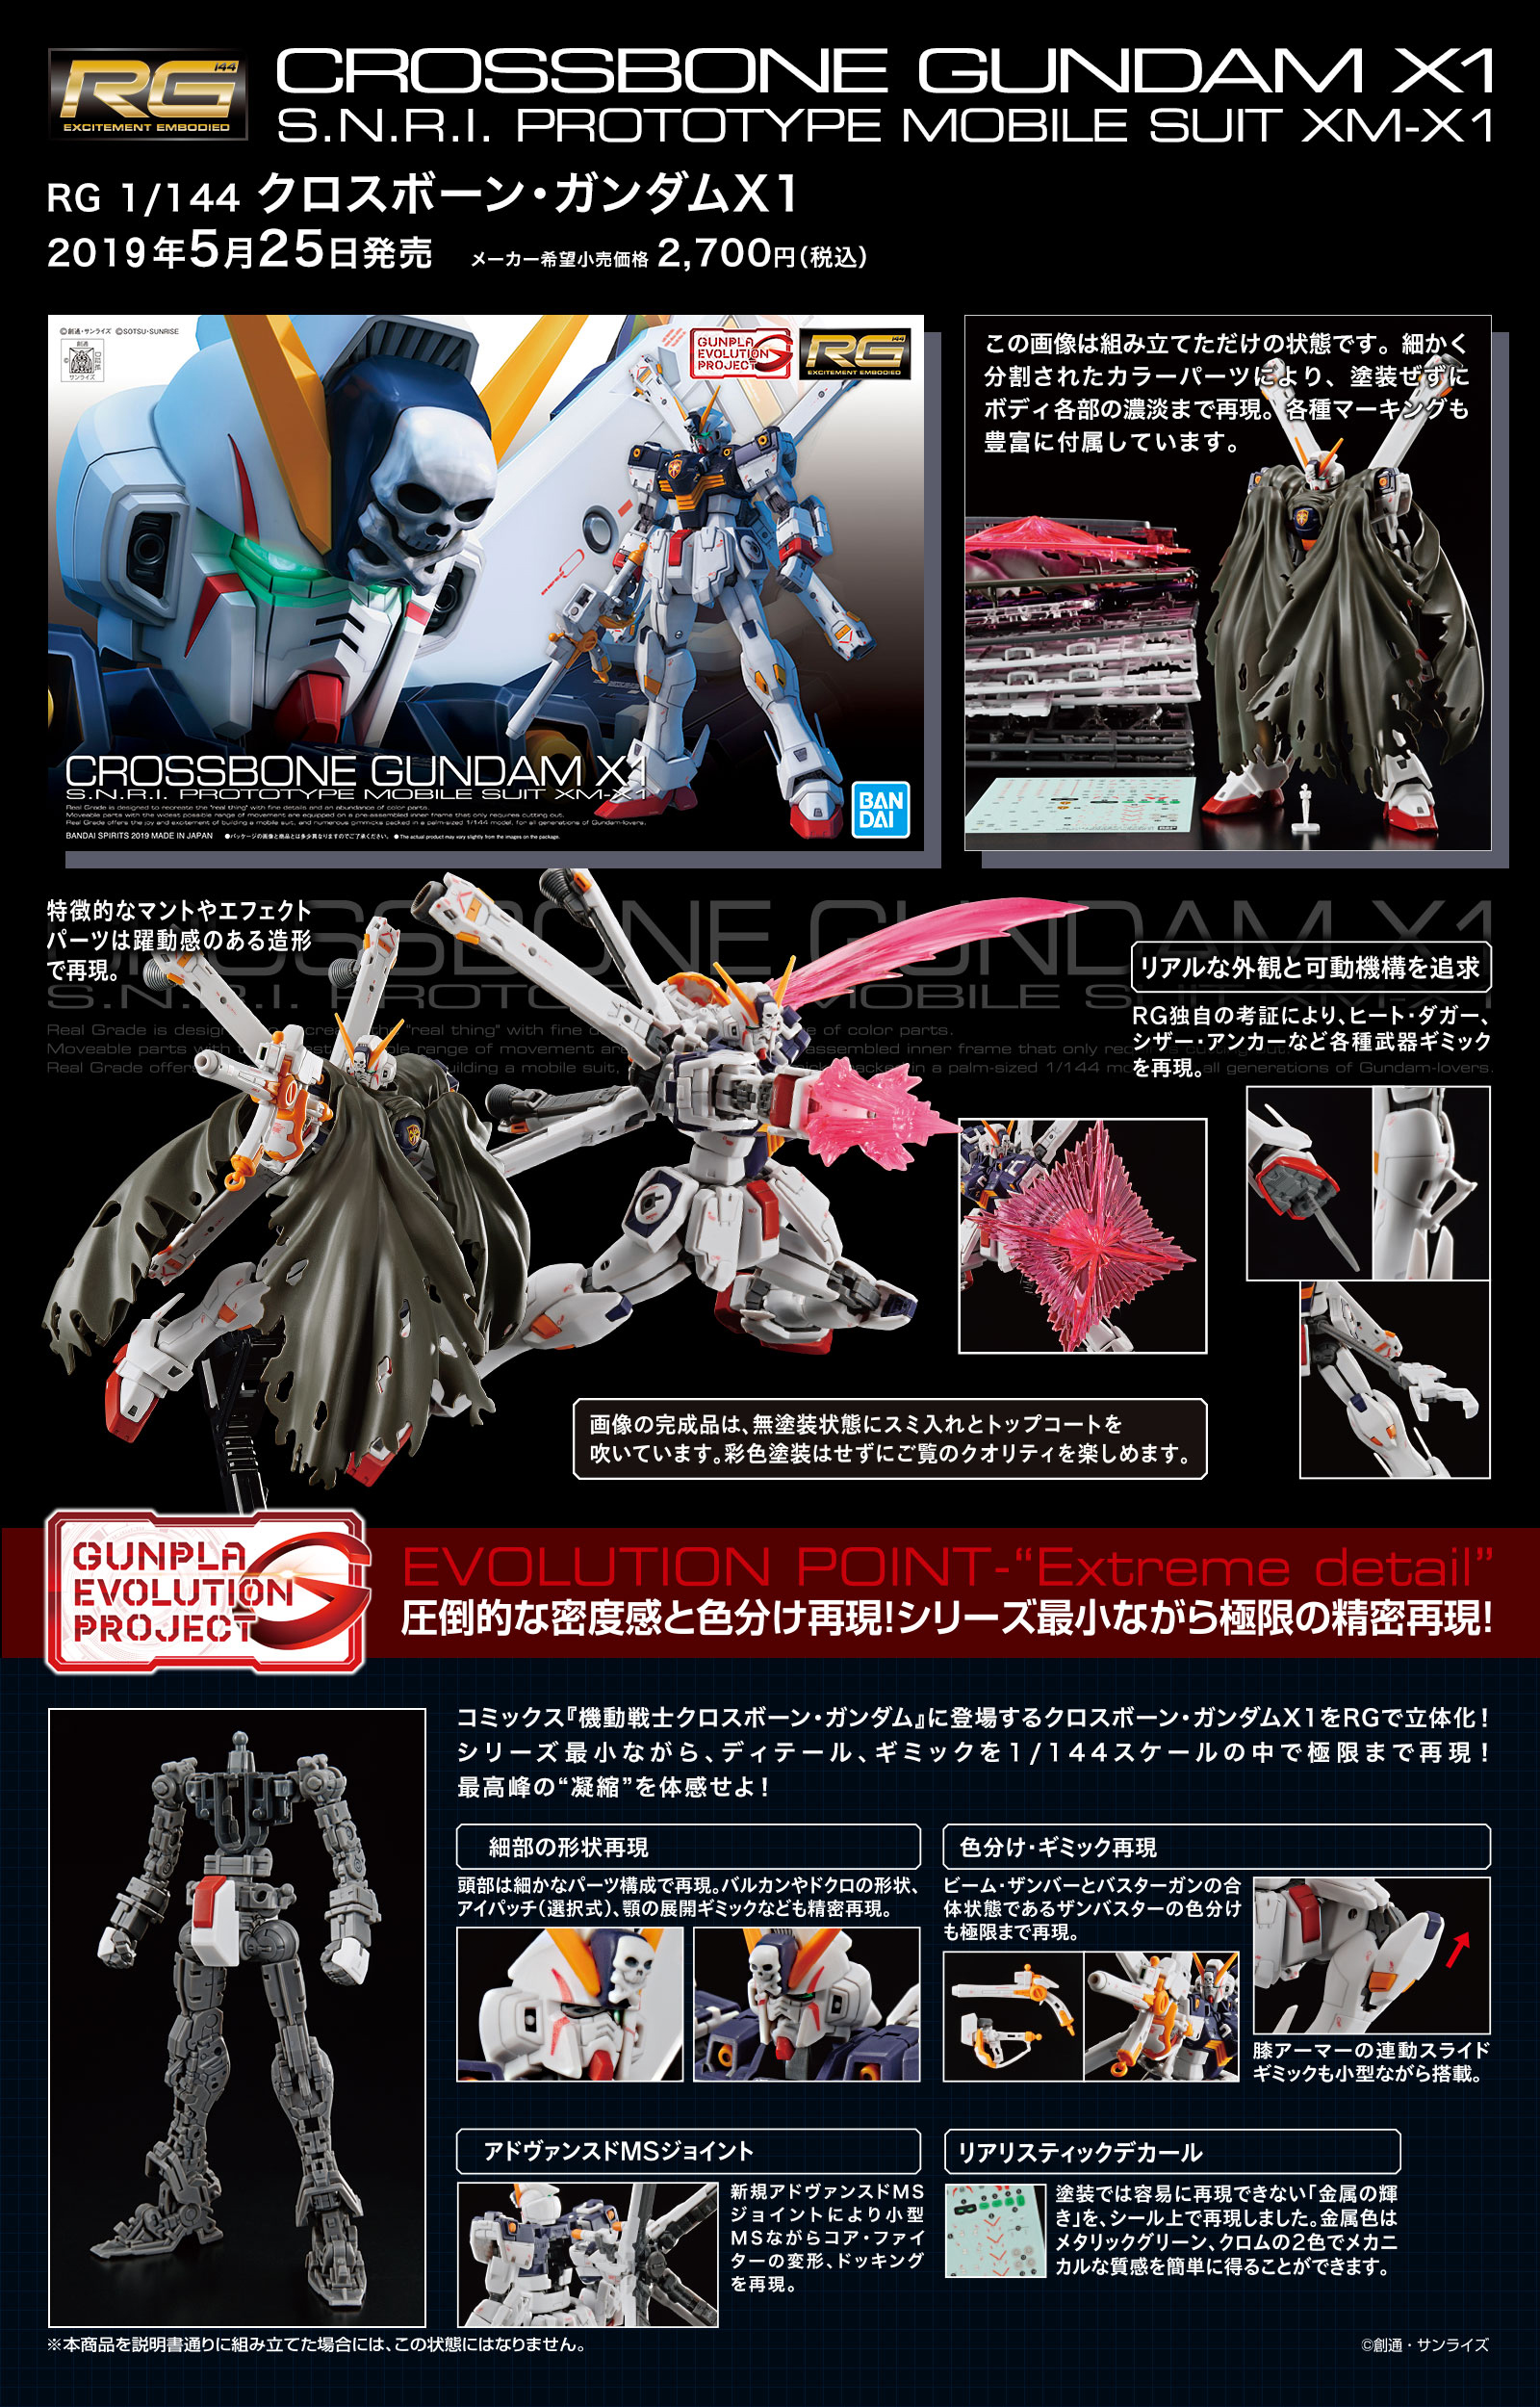 RG 1/144 XM-X1(F97) Crossbone Gundam X-1